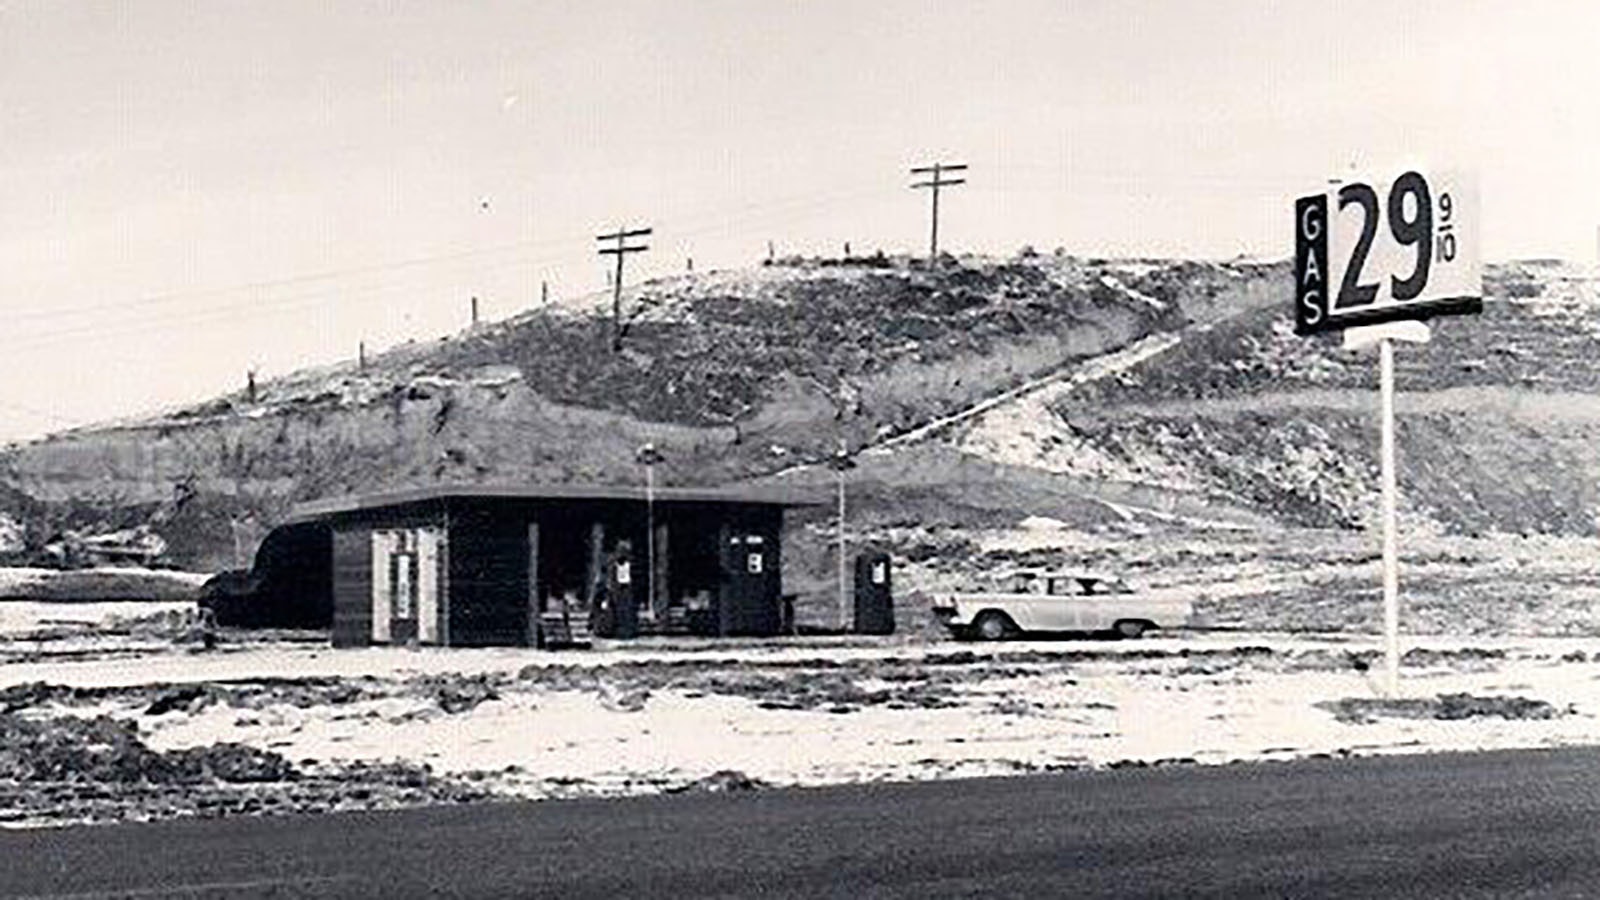 South Yellowstone Highway near Grandma's Liquor store circa 1960.